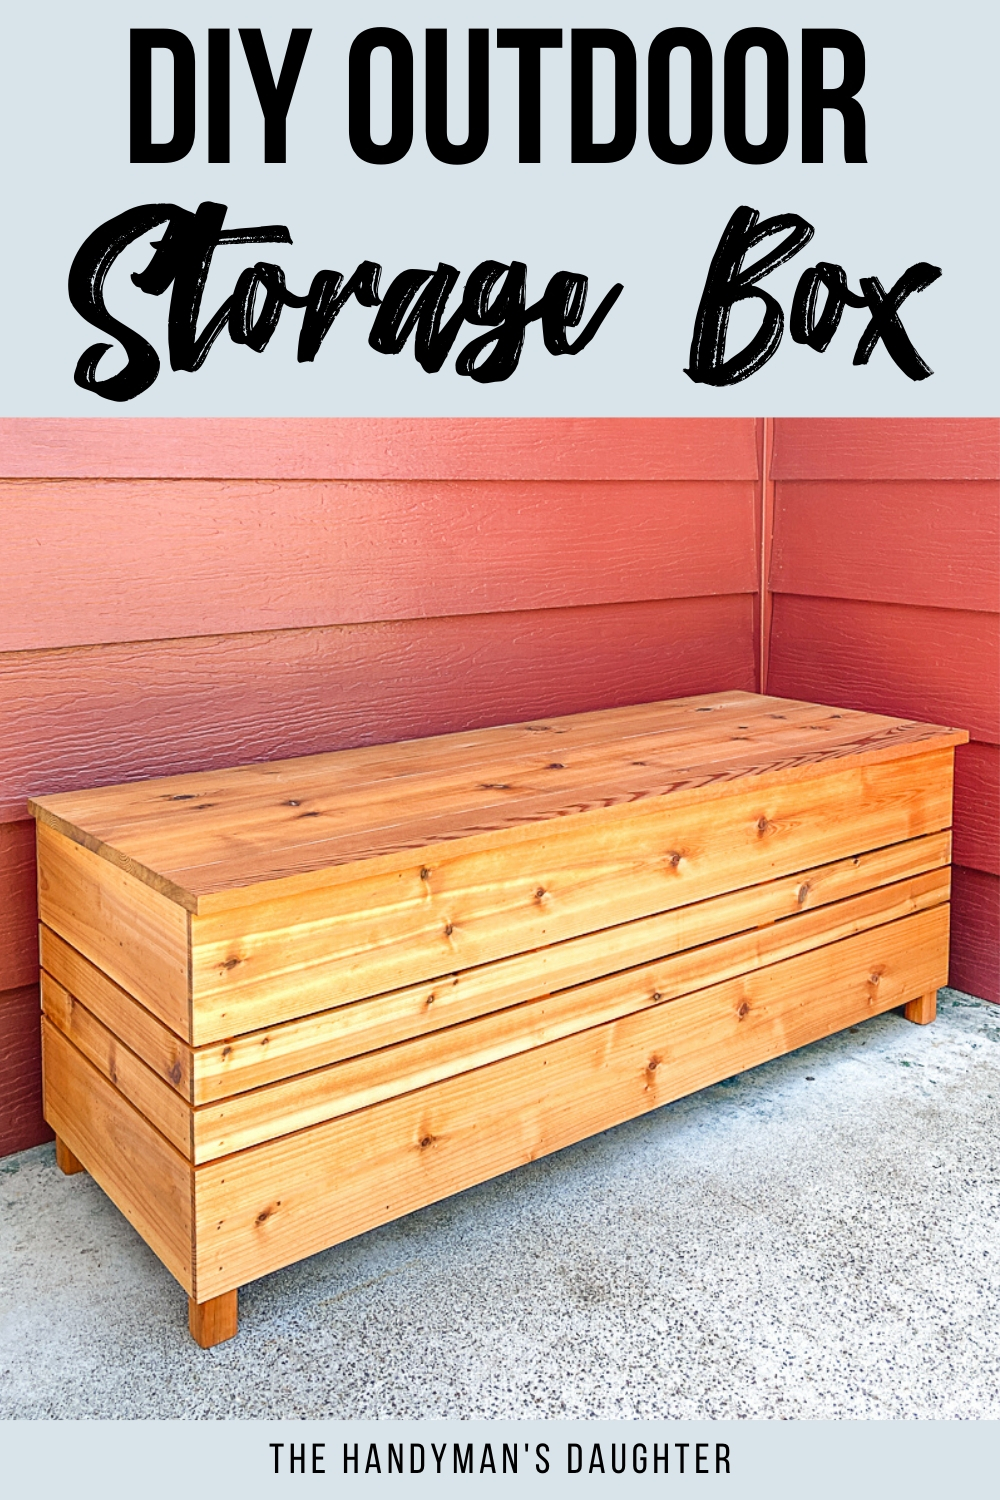 DIY Outdoor Storage Box with Free Plans - DIY Outdoor Storage Box with Free Plans -   19 diy Outdoor storage ideas